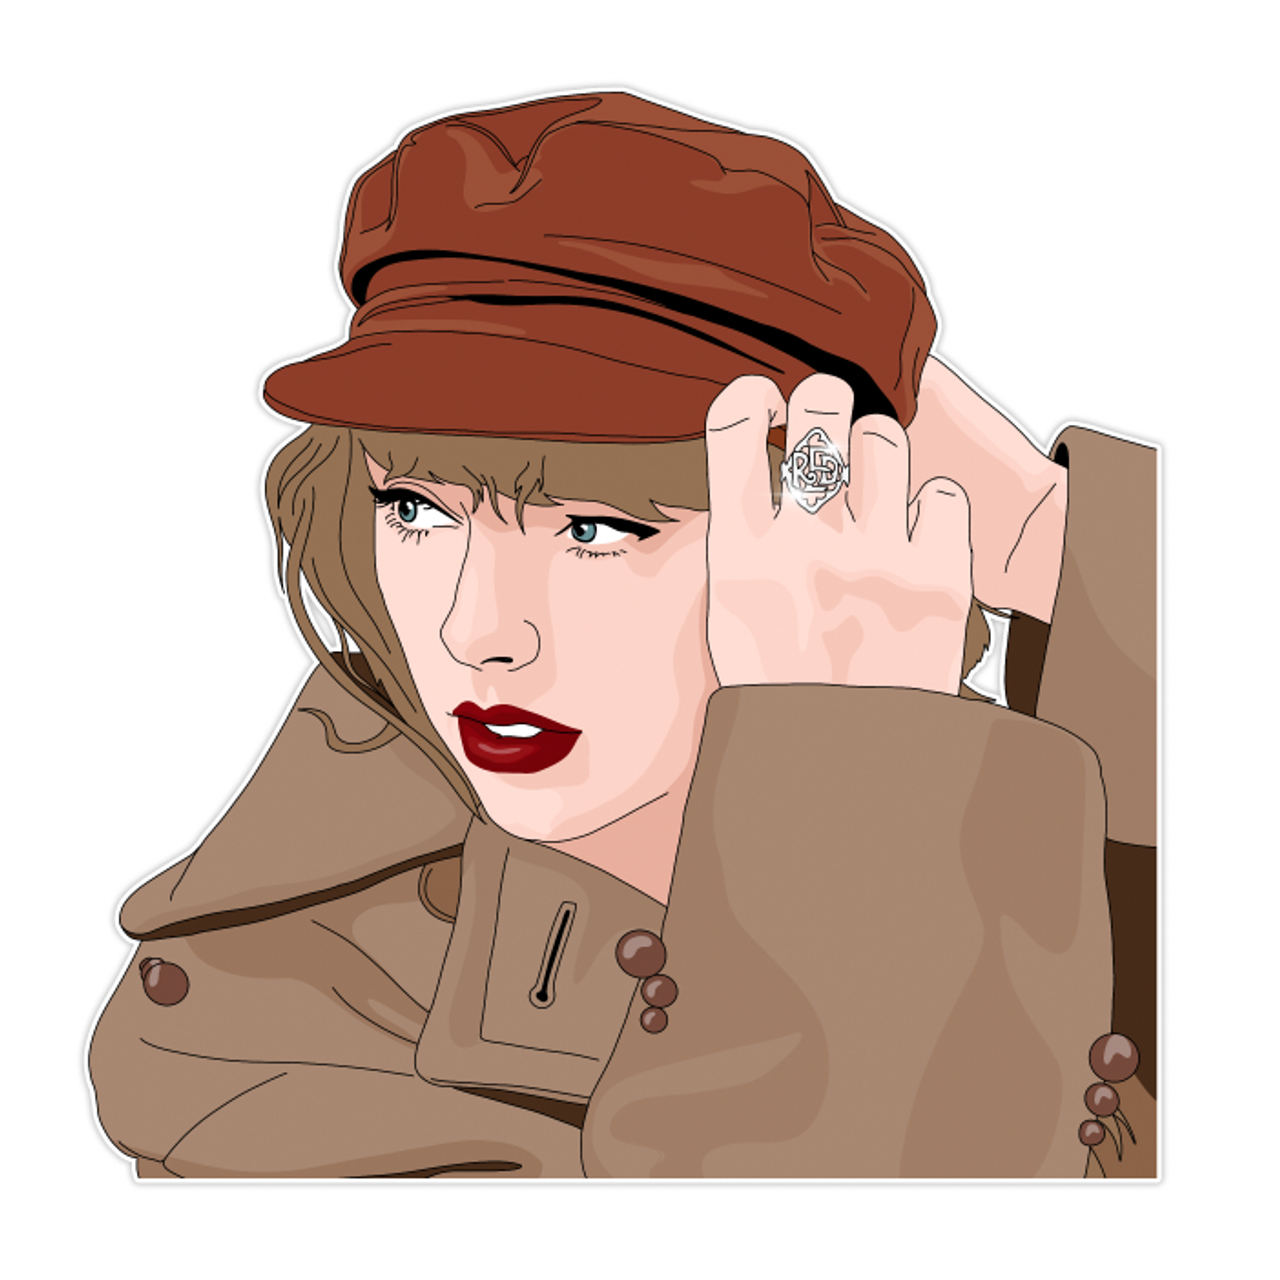 Taylor Swift Midnights Sticker